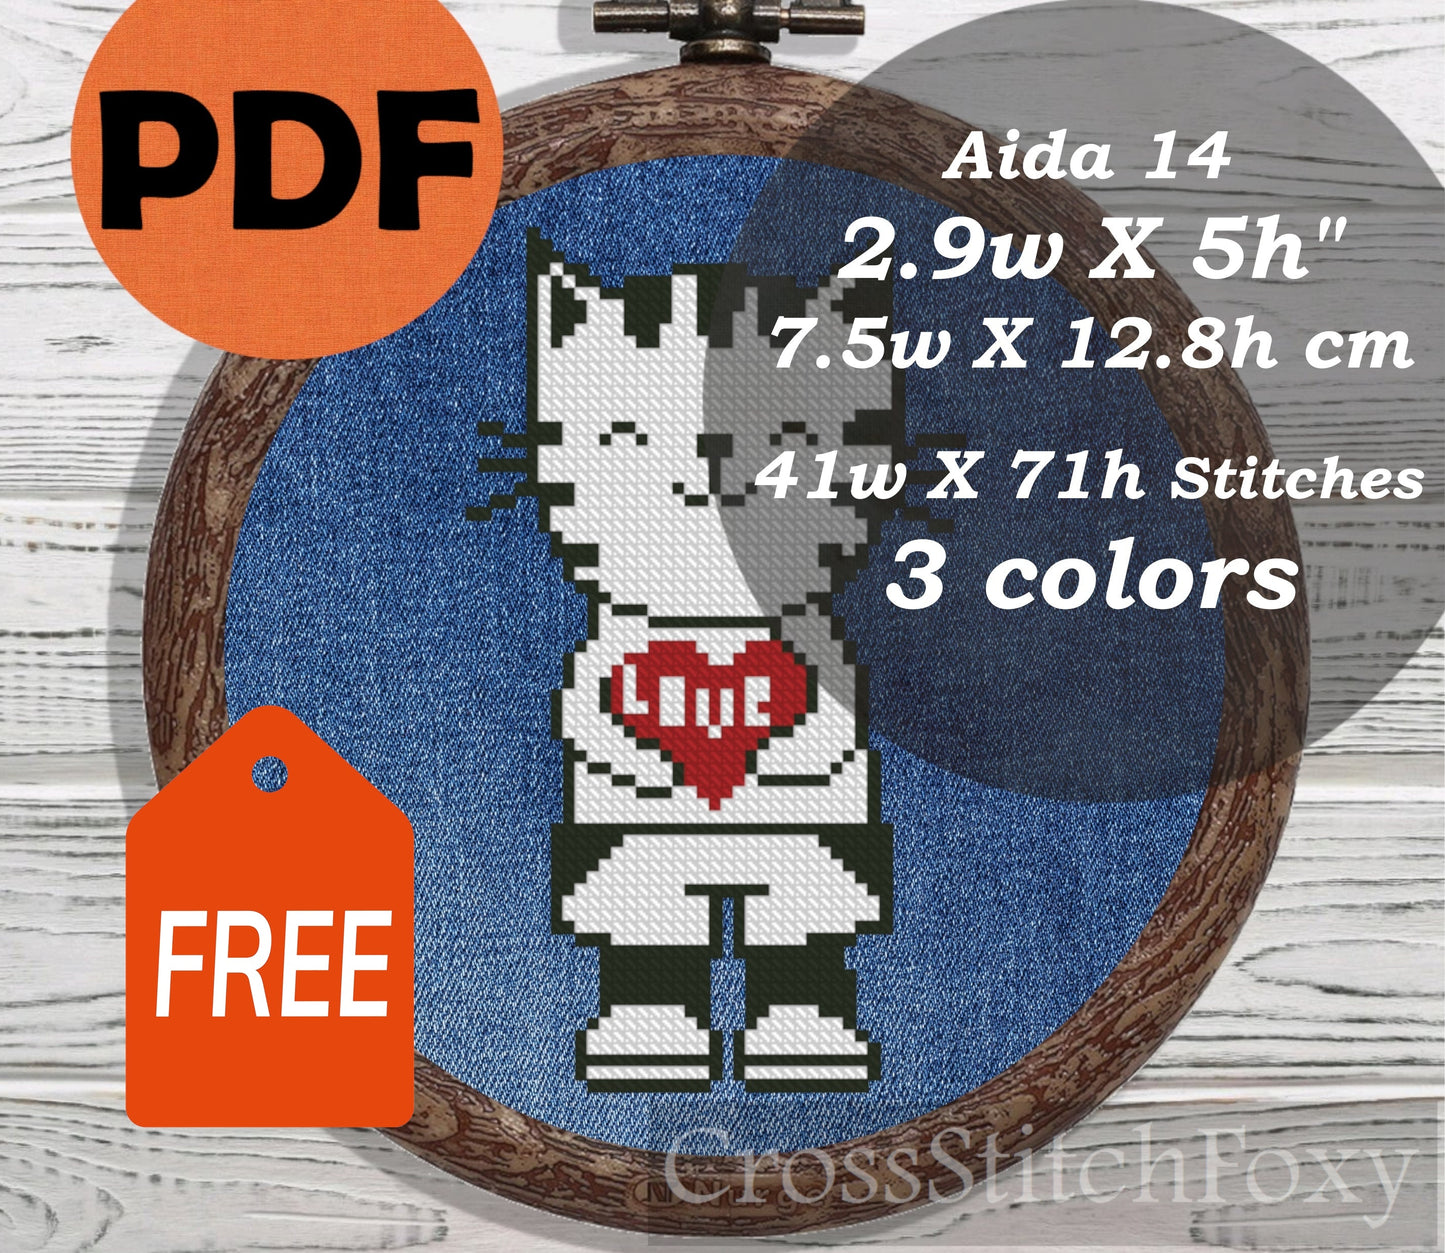 Valentine Cat with Heart cross stitch pattern